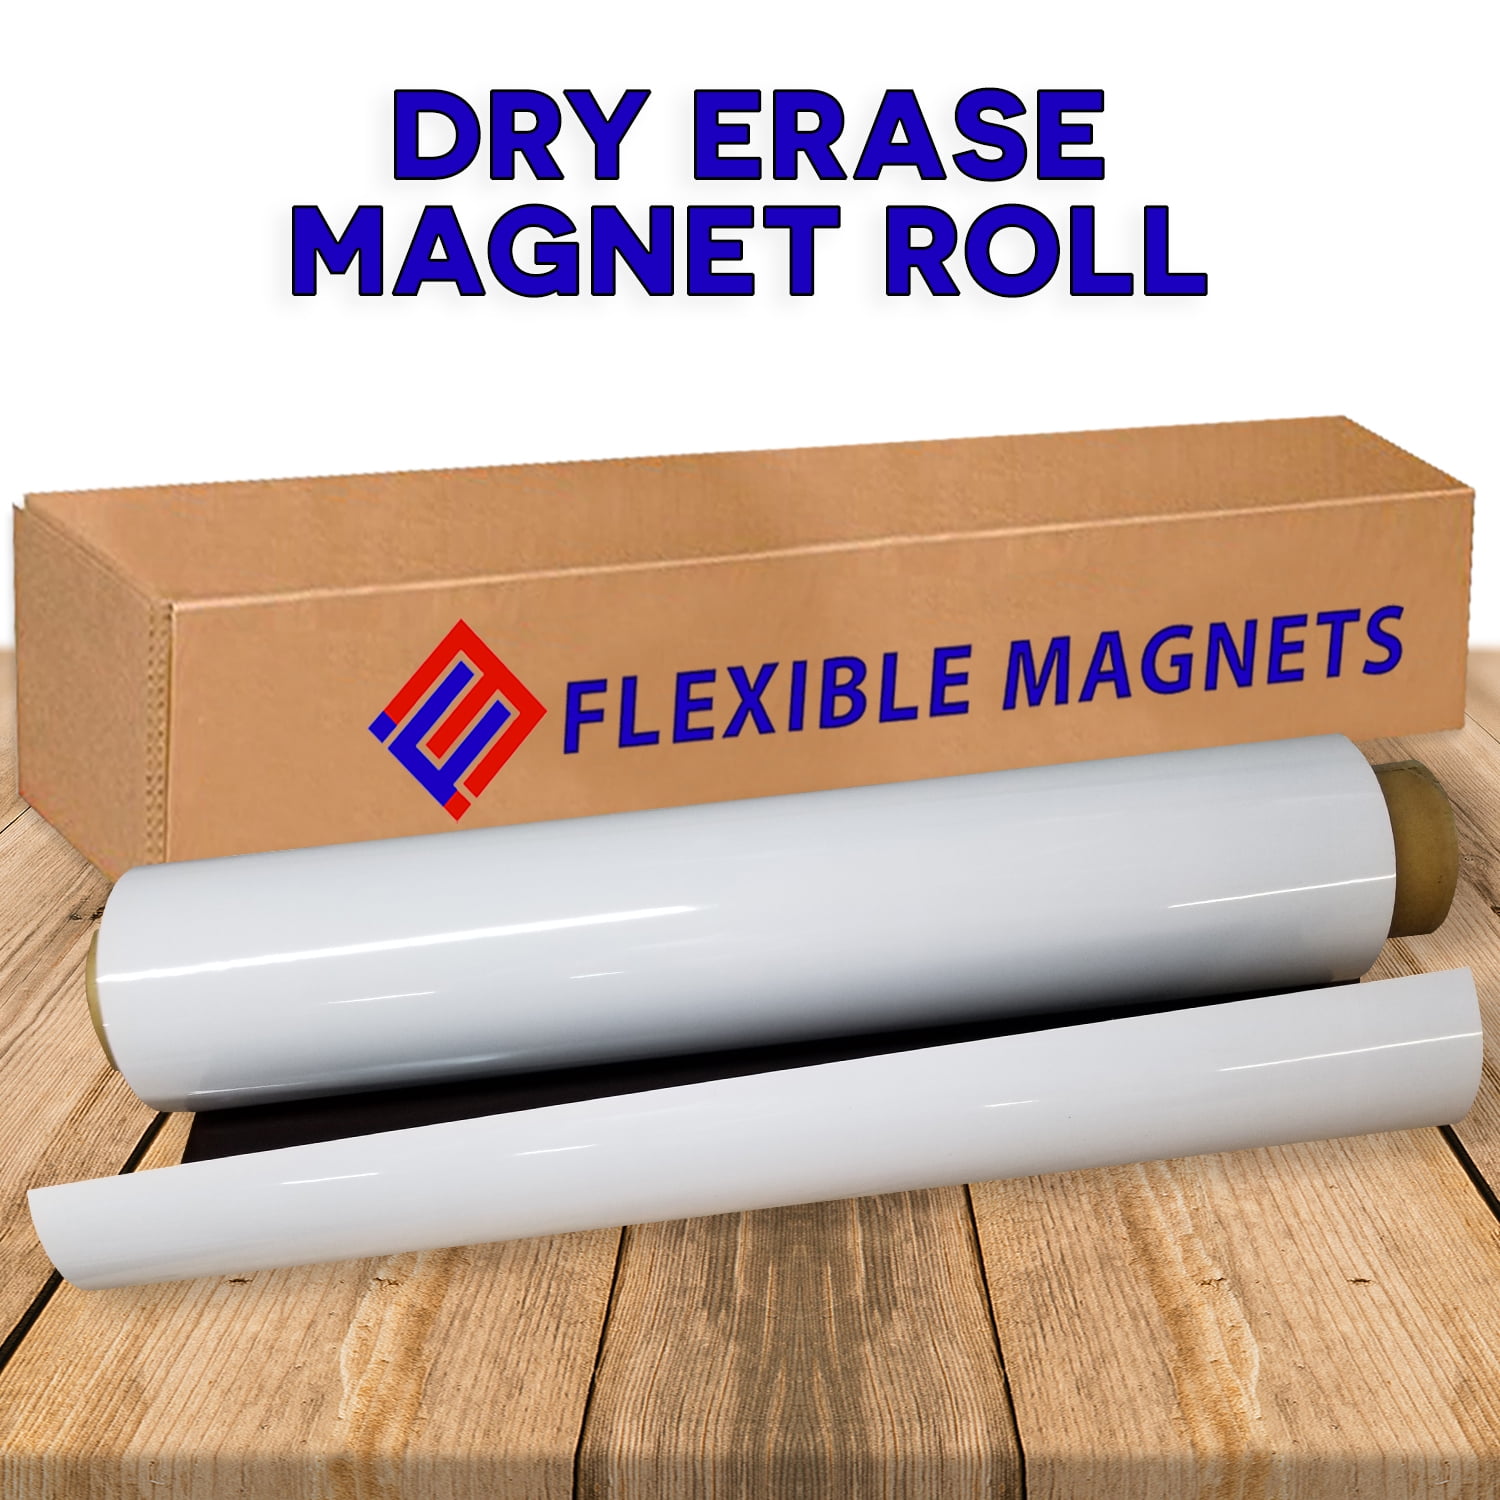 Roll Up Dry Erase Magnet Sheets